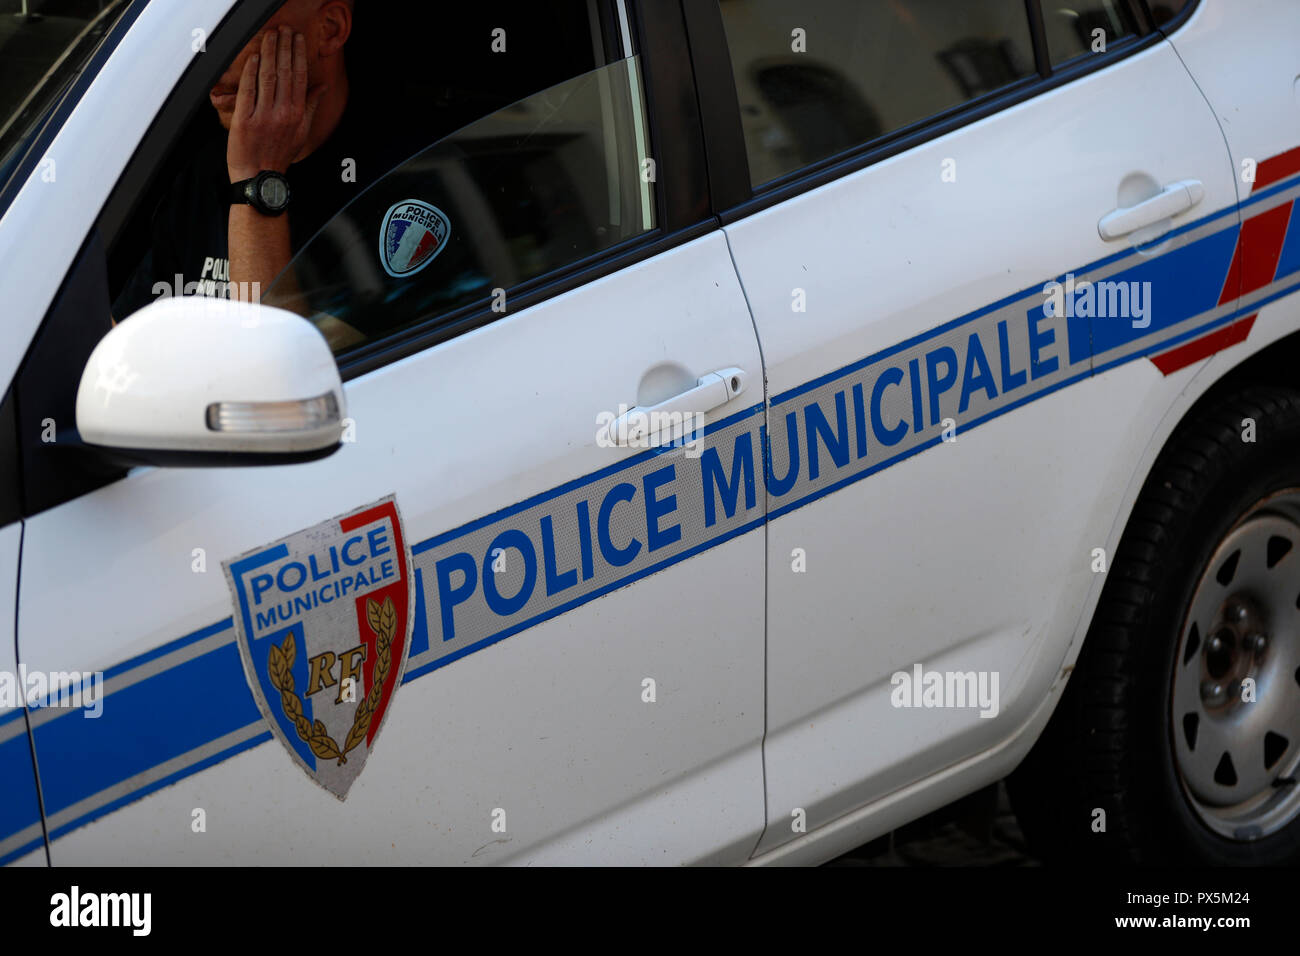 Police Municipale. Police car.  Megeve. France. Stock Photo